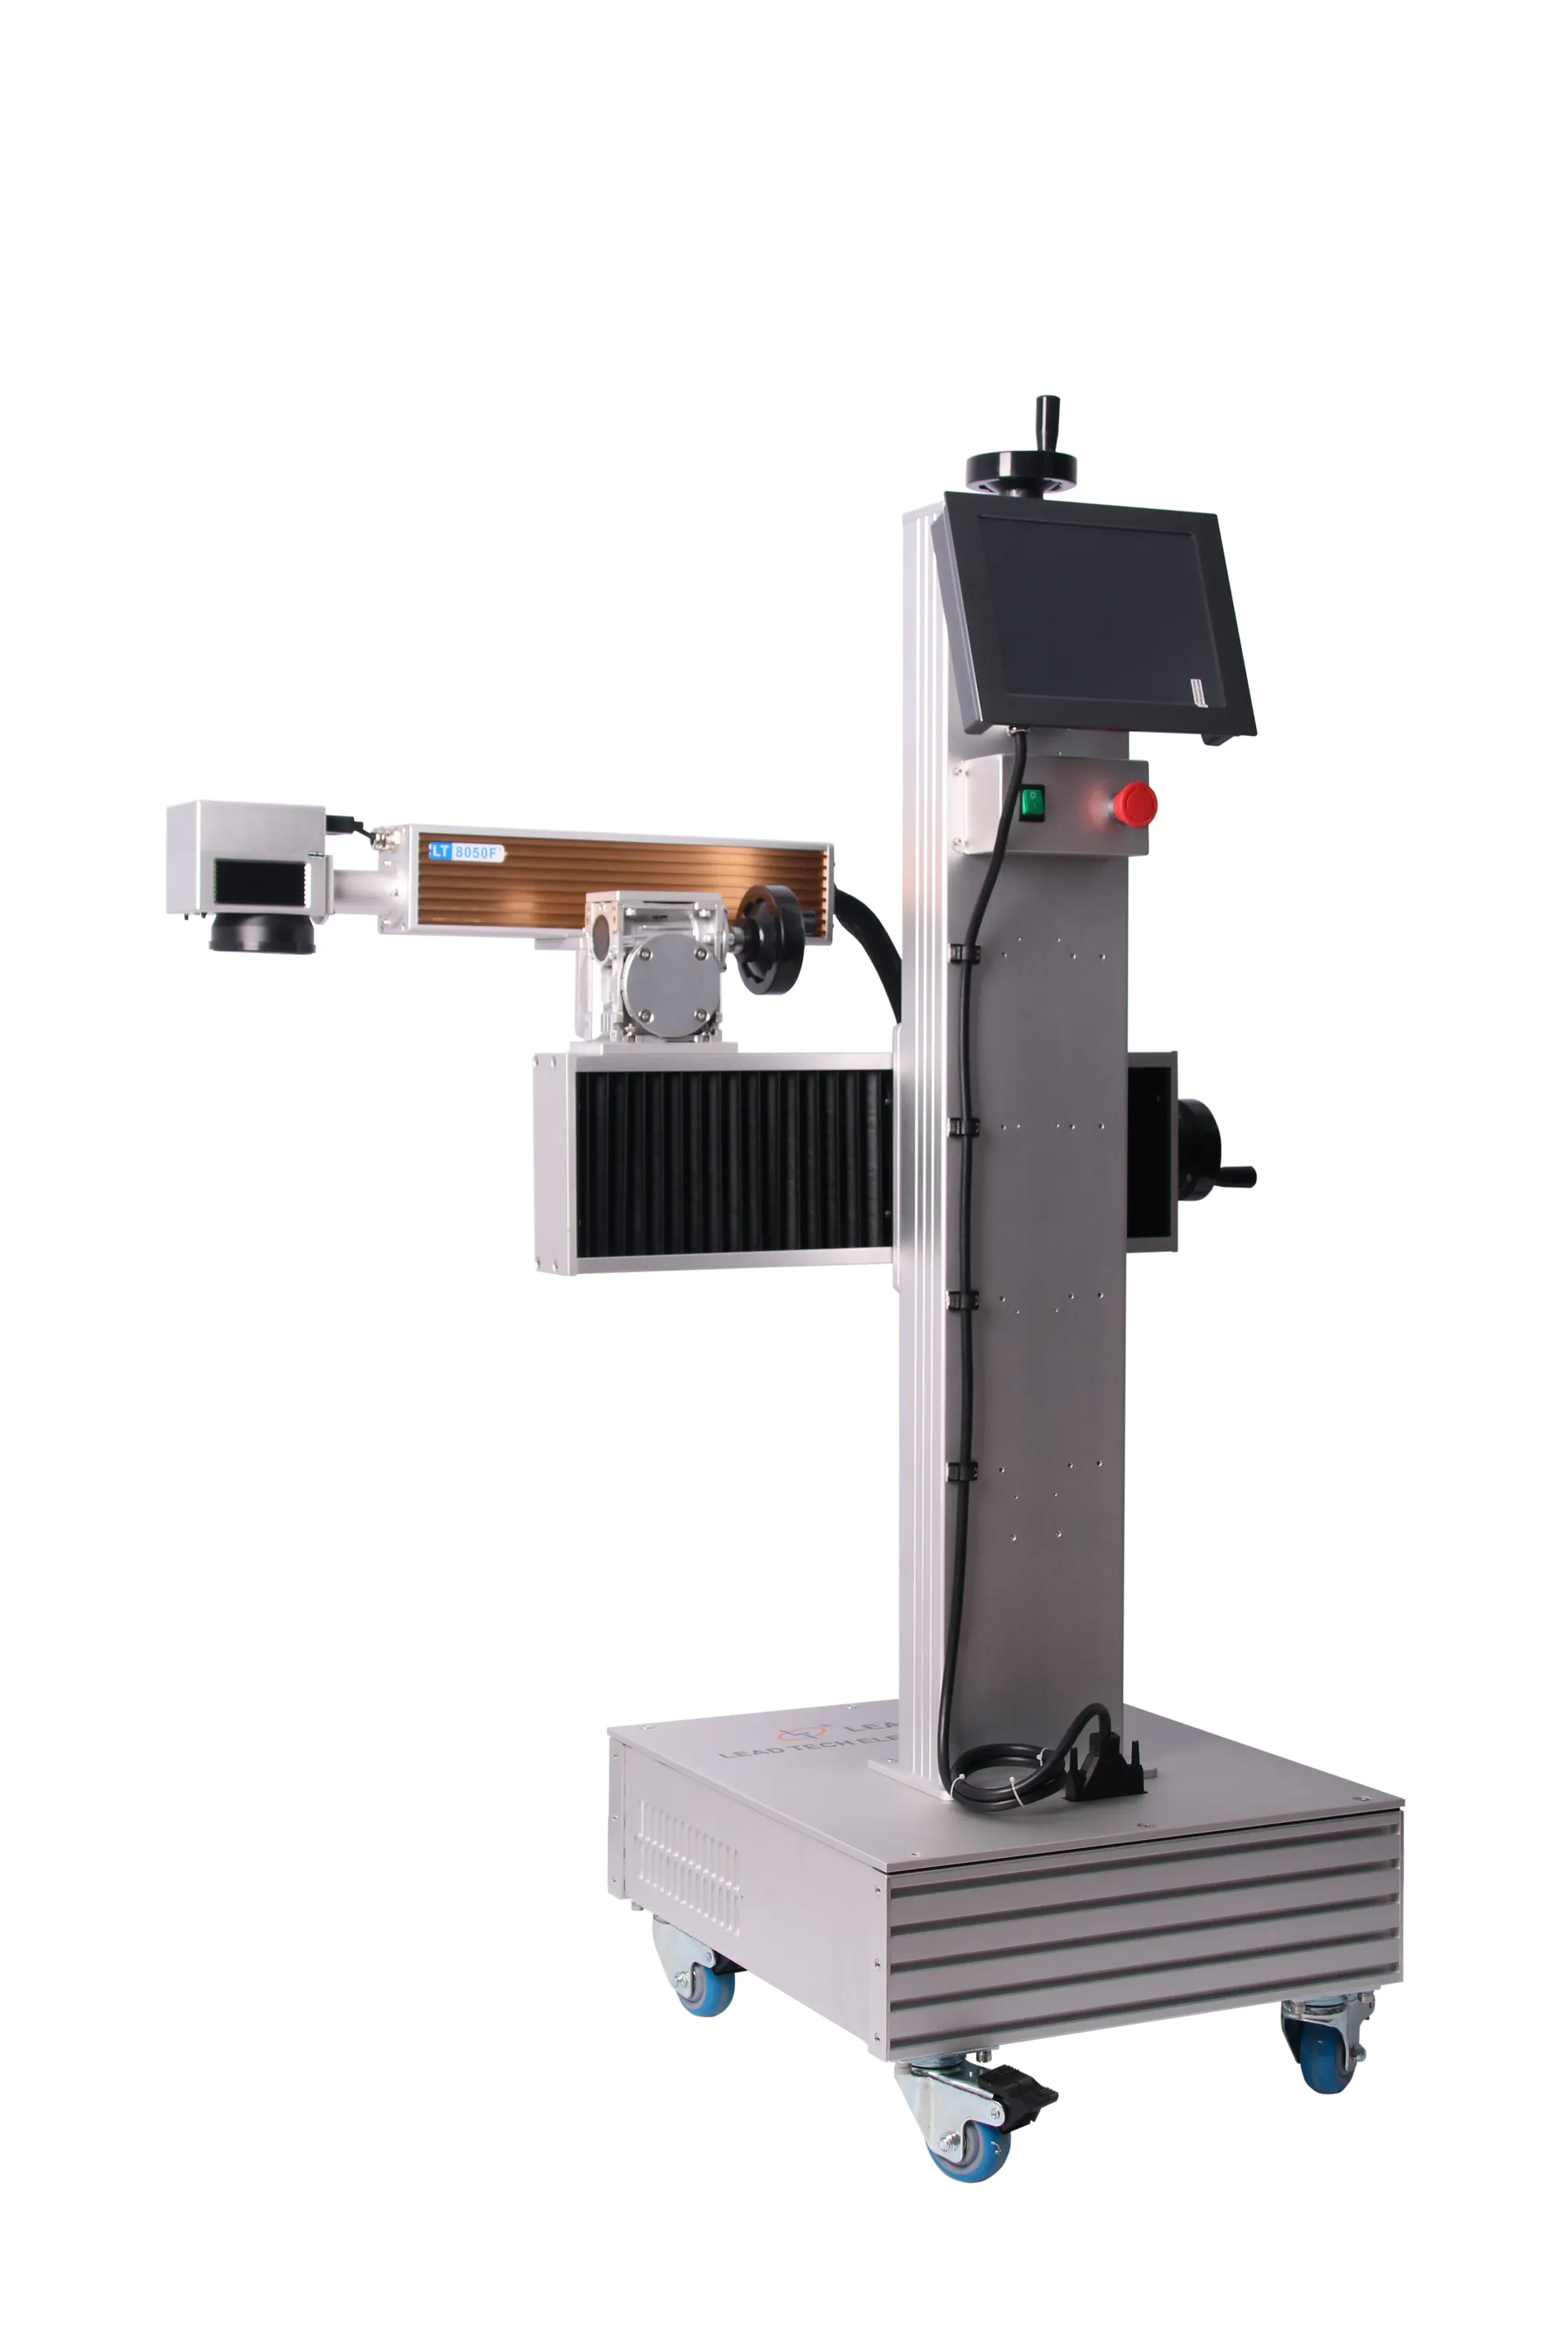 Lt8020f/Lt8030f/Lt8050f Fiber High Performance Economic PP Film Laser Marking Printer